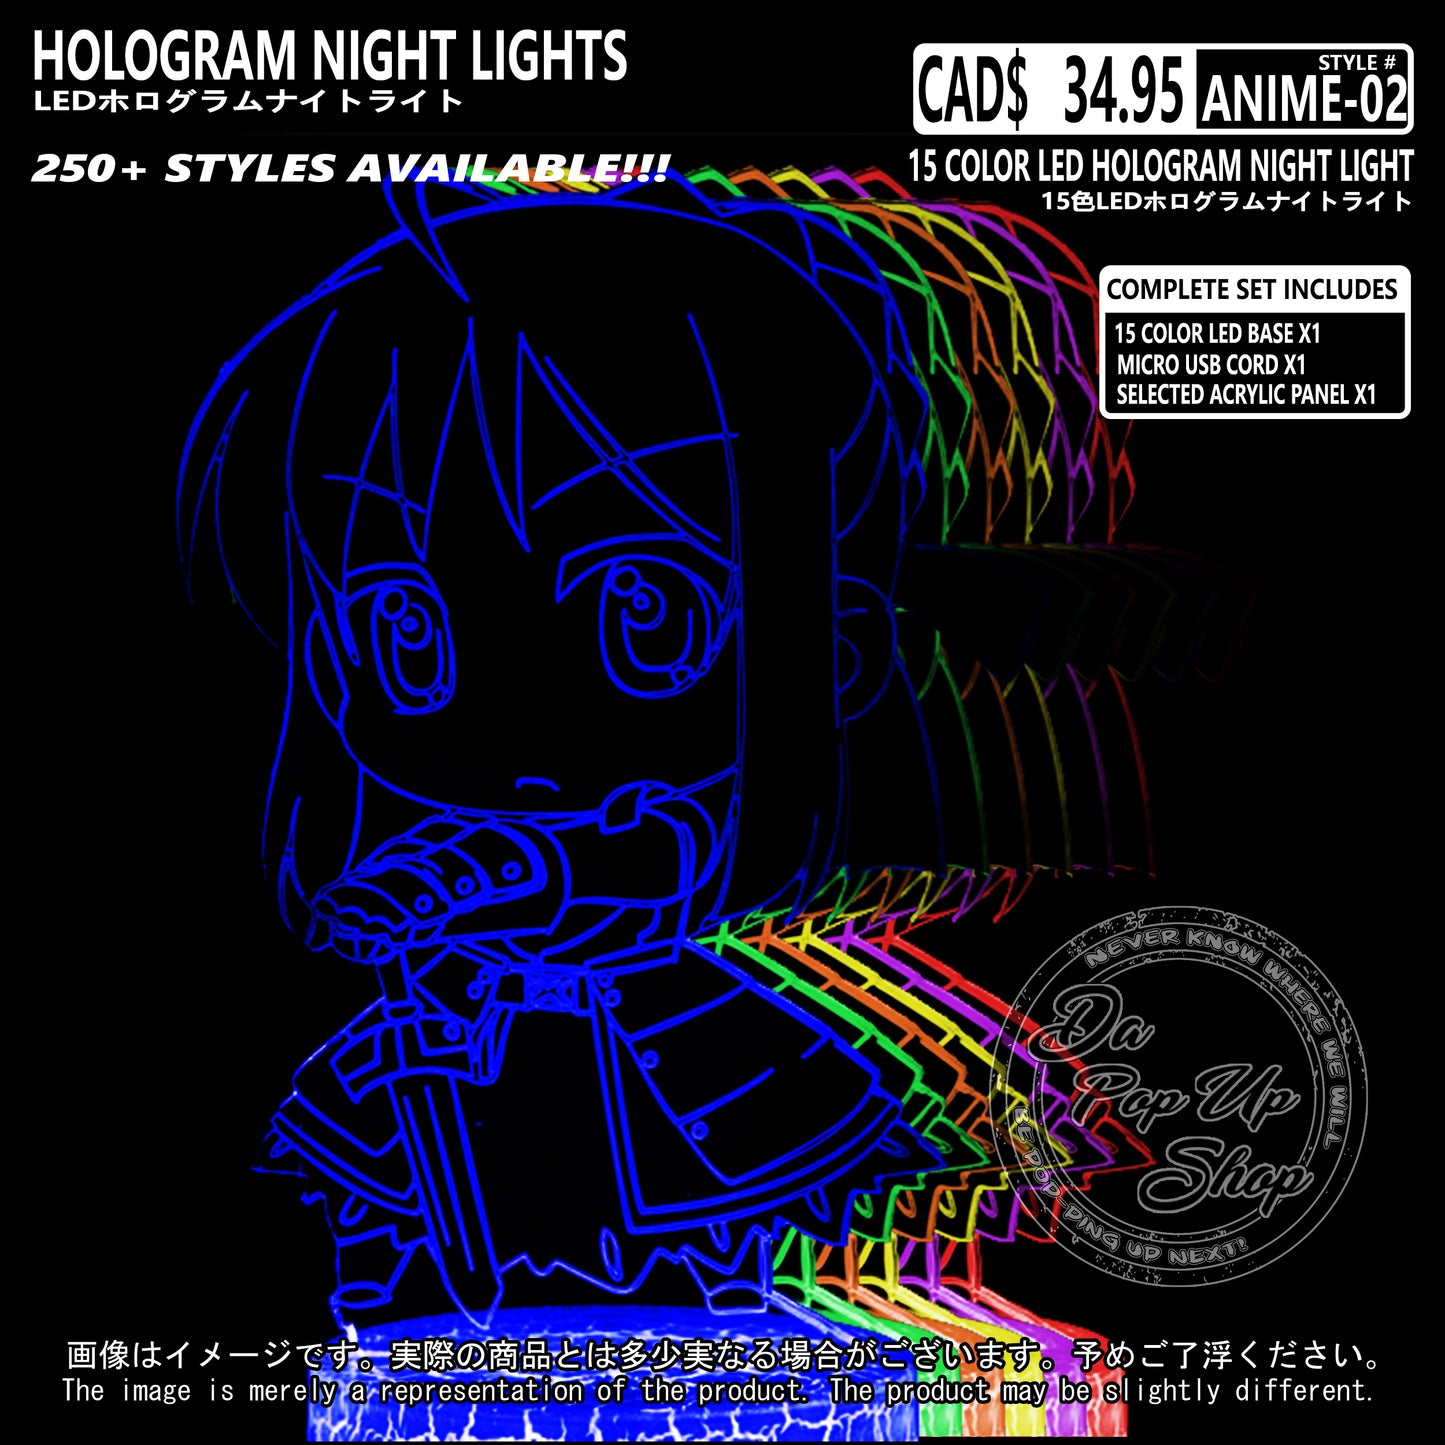 (ANIME-02) Fate Stay Night Anime Gaming Hologram LED Night Light